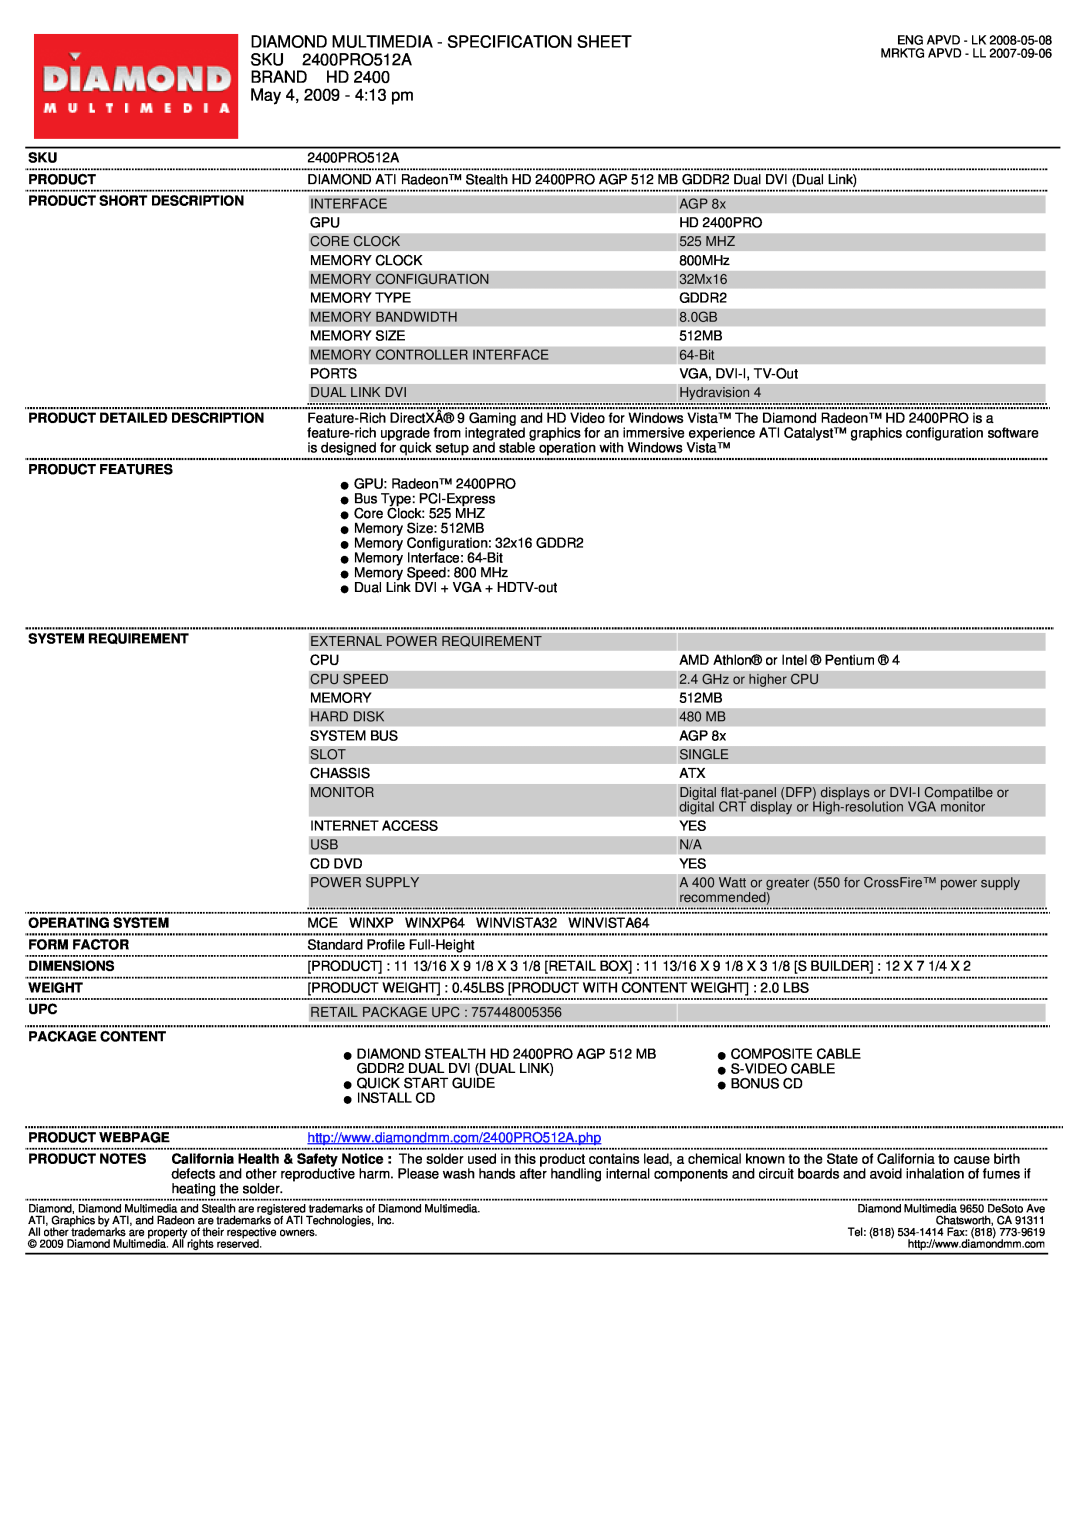 Diamond Multimedia SKU 2400PRO512A specifications Diamond Multimedia - Specification Sheet, Brand Hd, May 4, 2009 - 413 pm 